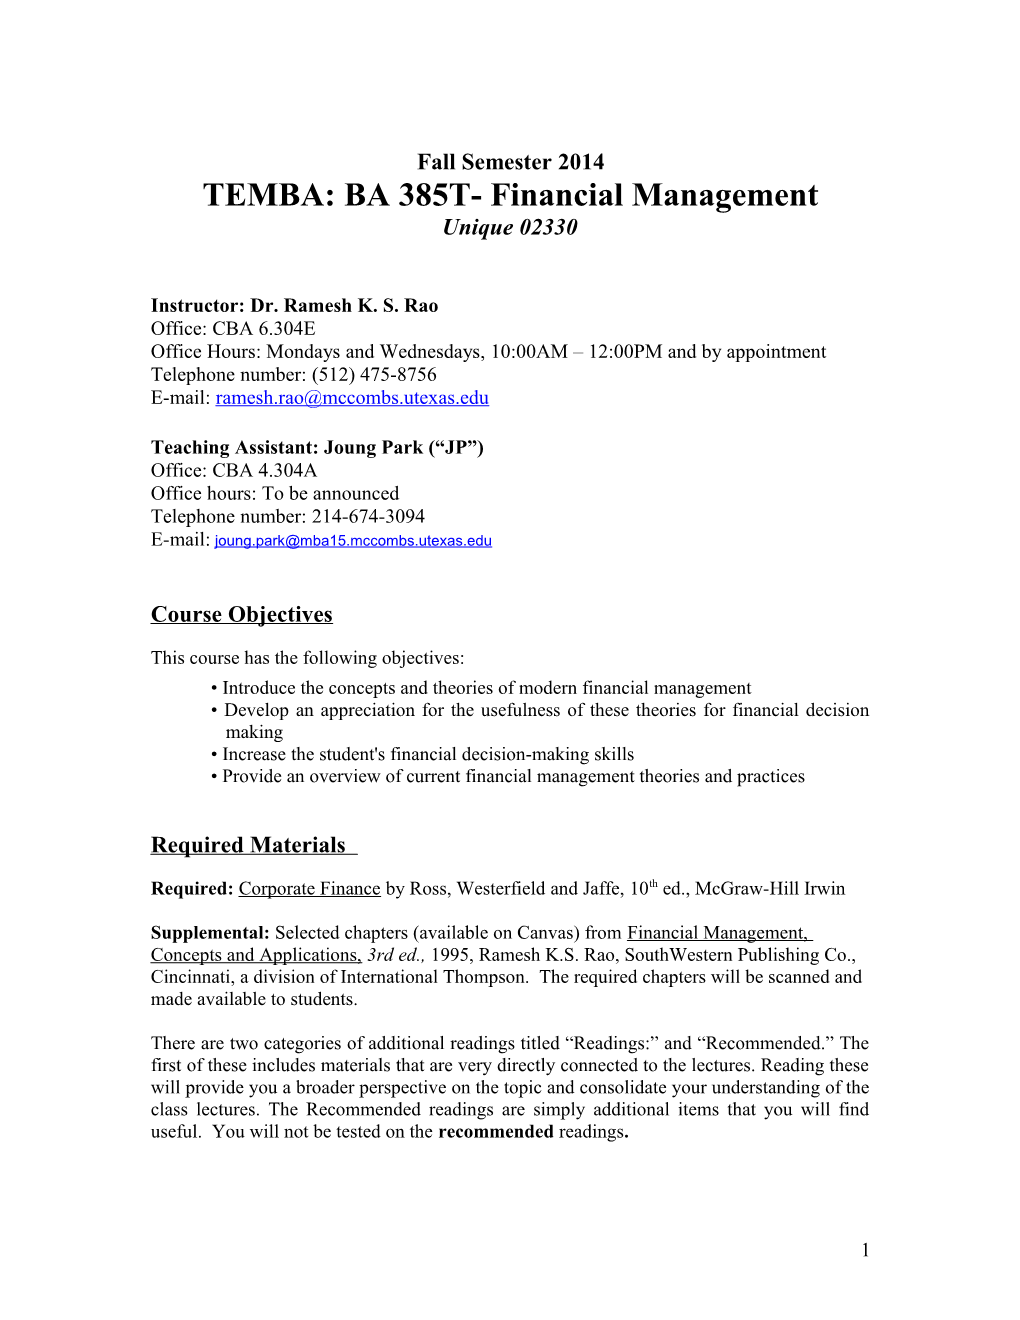 BA 385T - Financial Management TEMBA - Rao